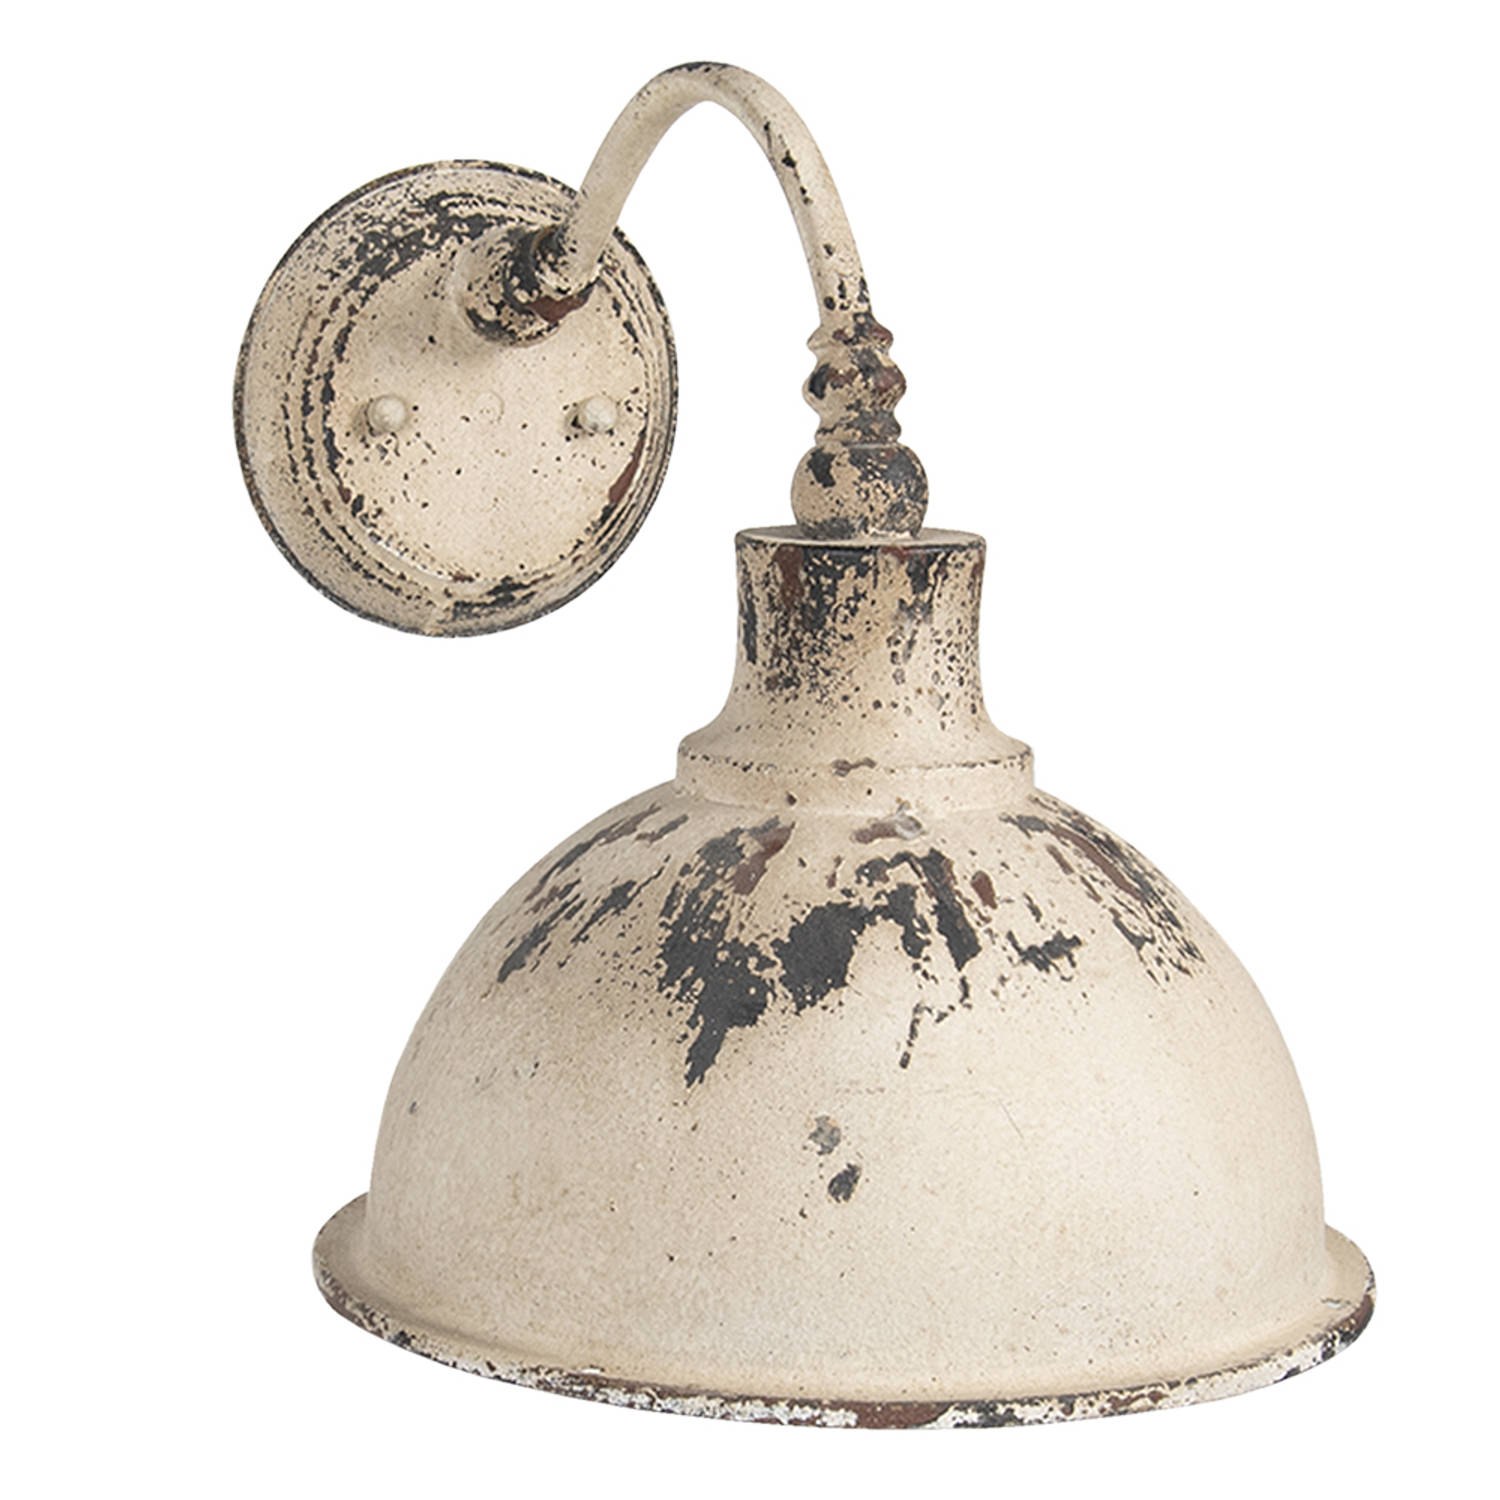 HAES DECO Wandlamp Industrial Vintage-Retro Lamp, 43x28x31 cm Wit Metaal Ronde Muurlamp, Sfeerlamp